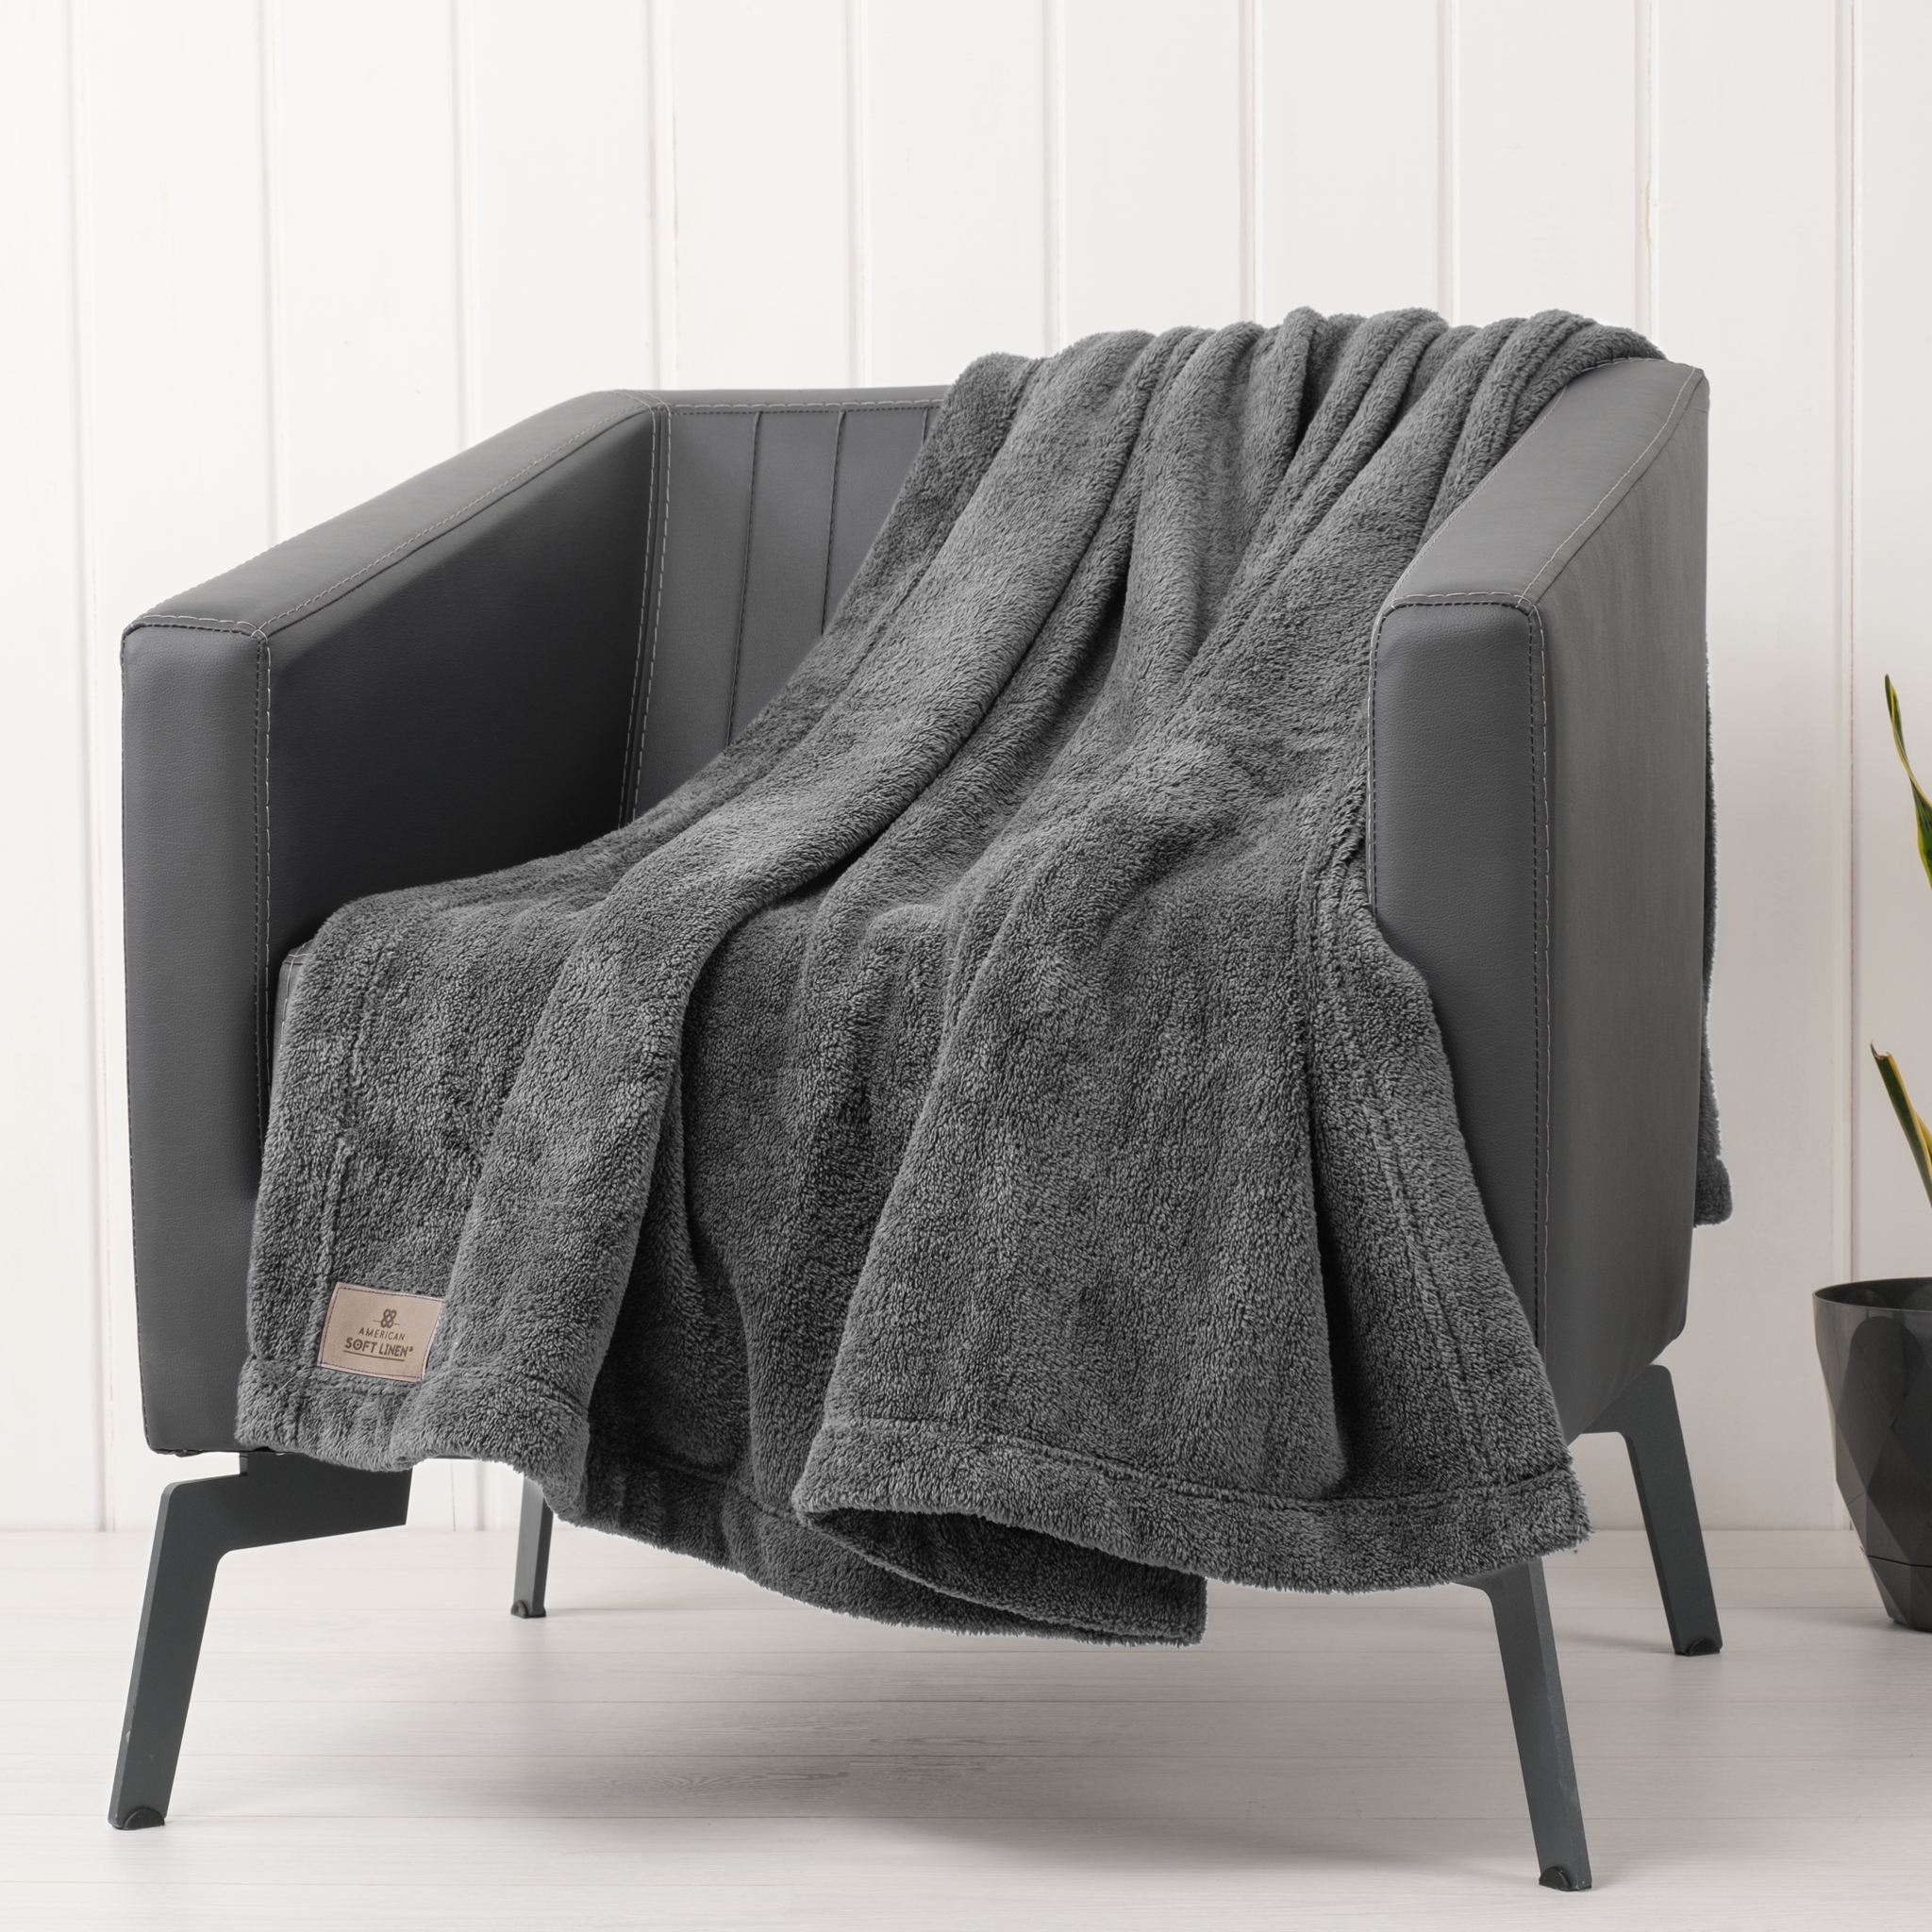 American Soft Linen - Bedding Fleece Blanket - Throw Size 50x60 inches - Gray - 1